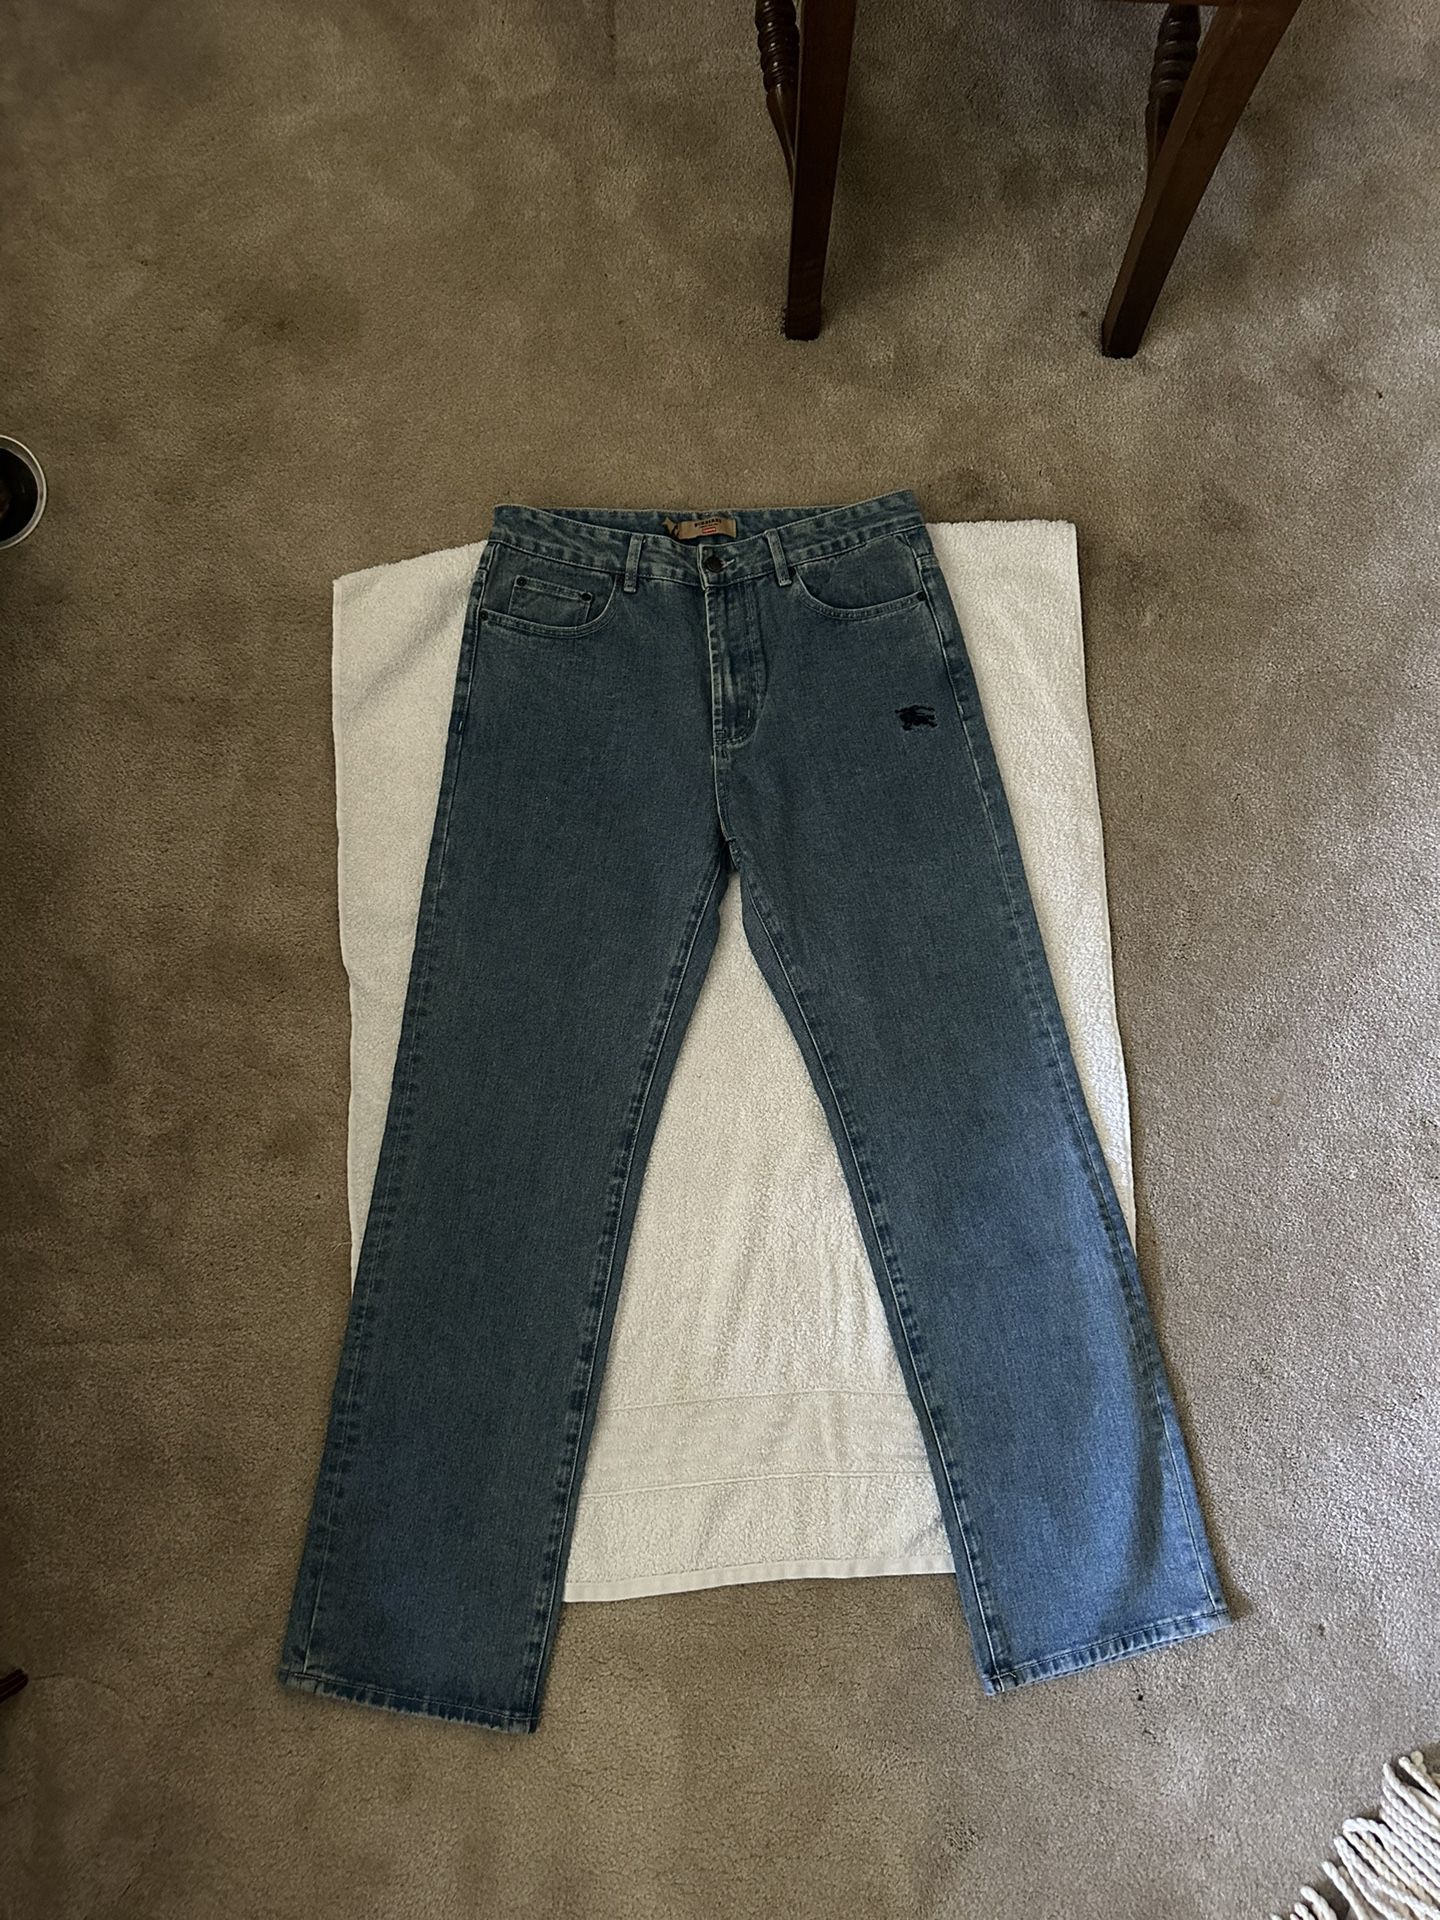 Supreme x Burberry Jeans